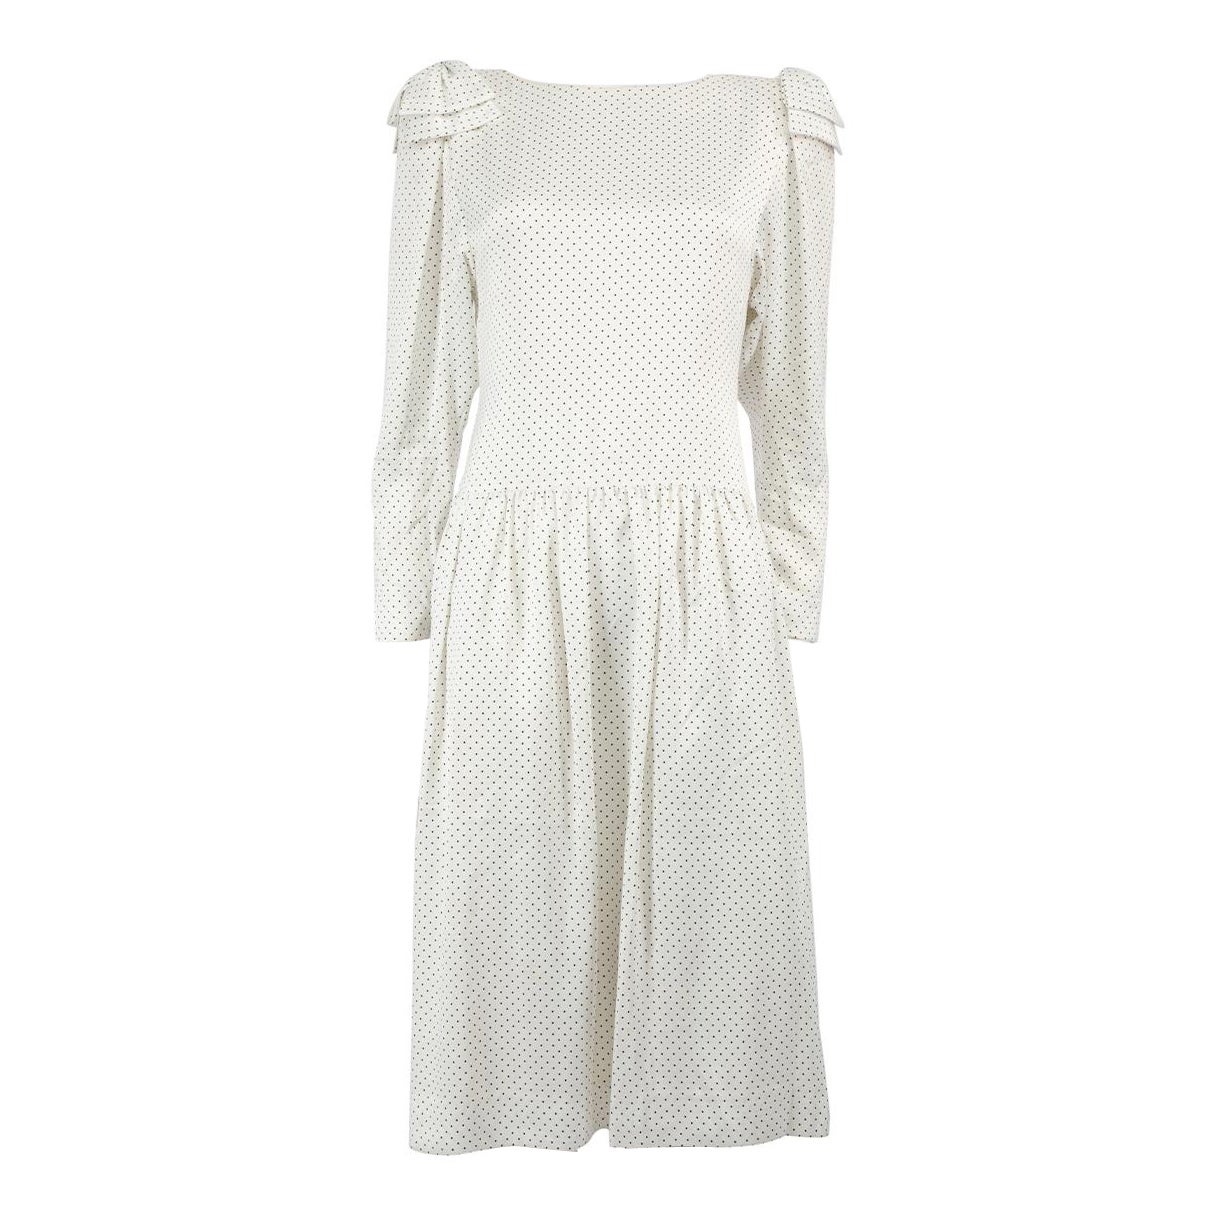 Hanae Mori White Polka Dot Long Sleeve Dress Size M For Sale